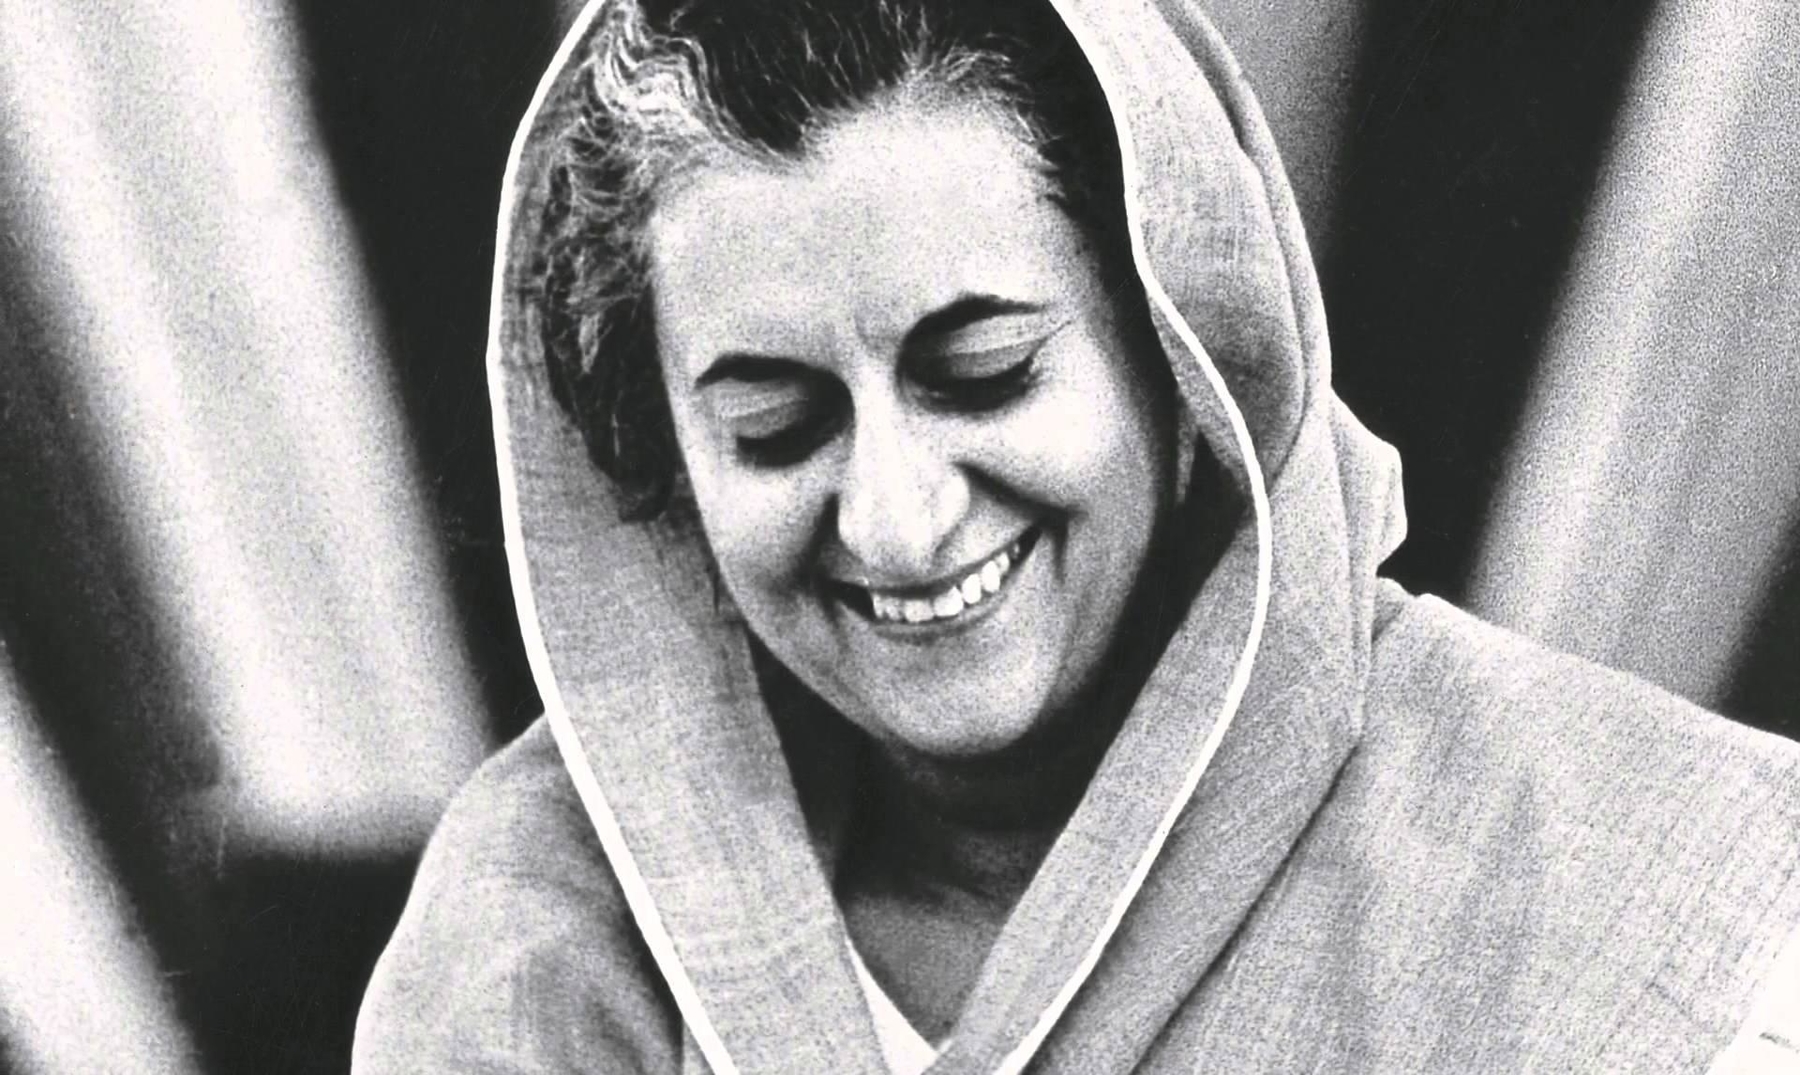 Frases de Indira Gandhi